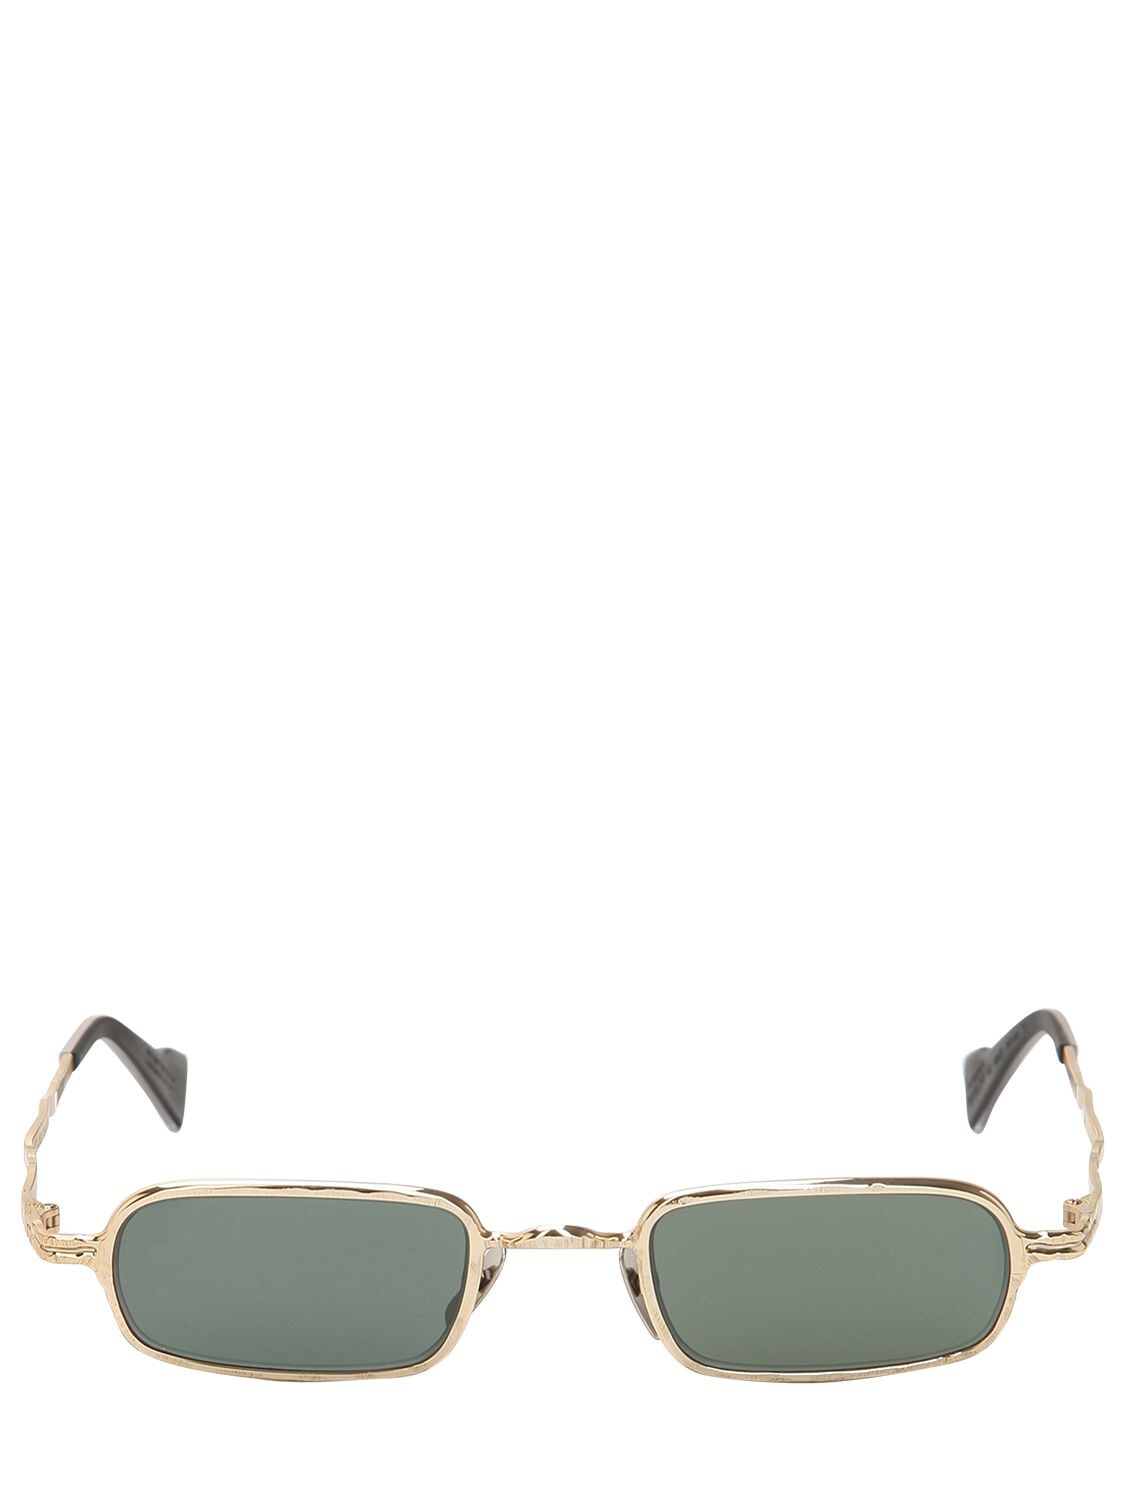 Kuboraum Berlin Z18 Squared Metal Sunglasses In Gold,green